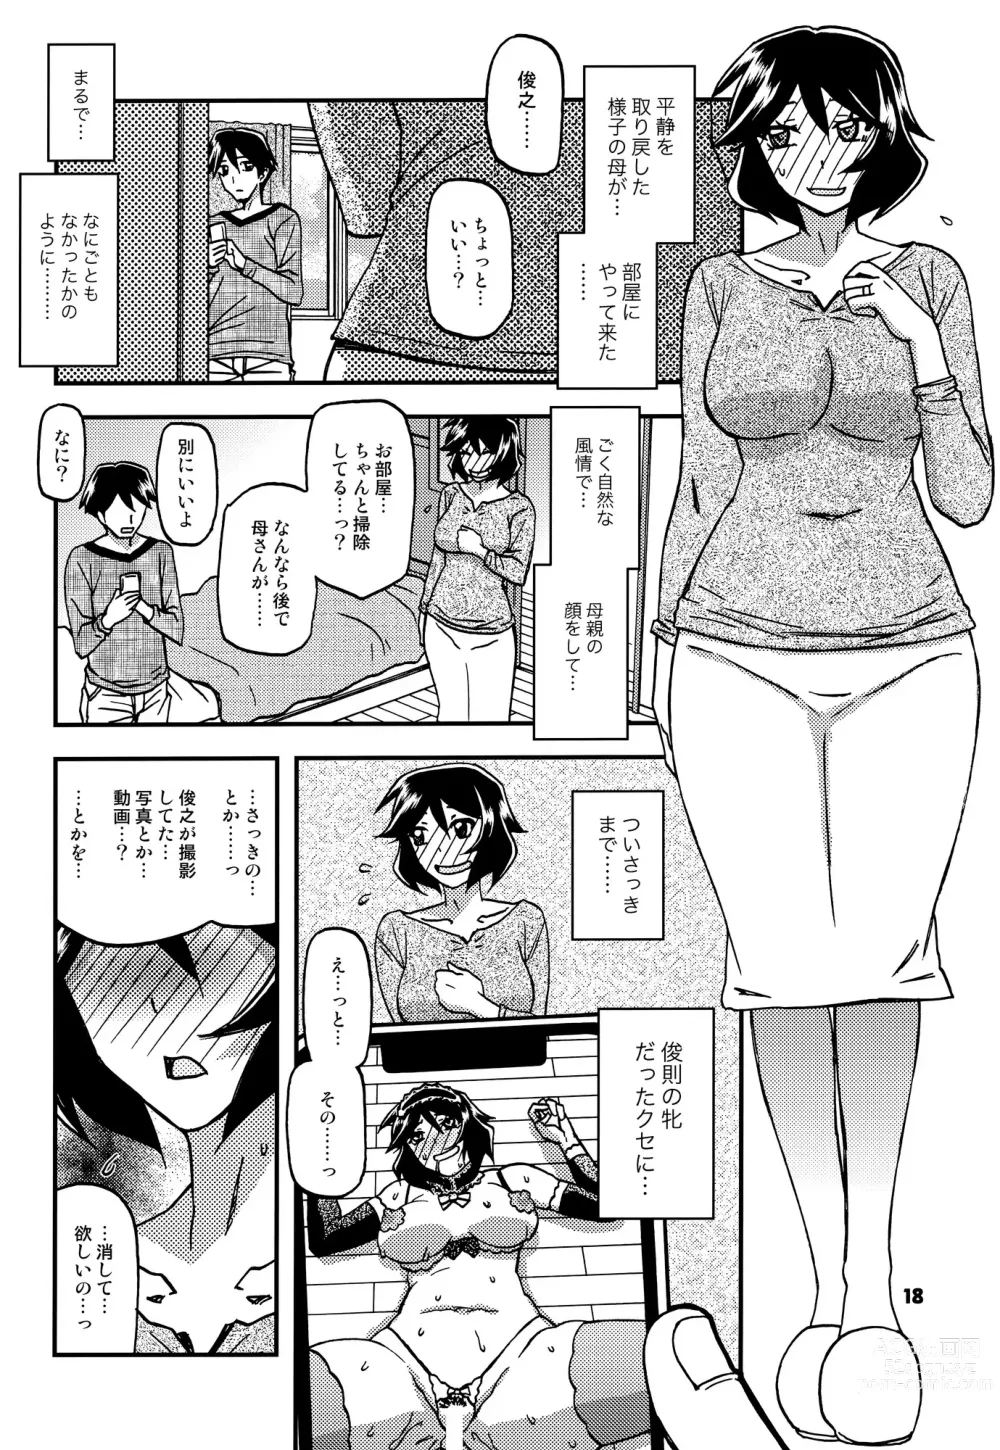 Page 17 of doujinshi Akebi no Mi - Fumiko CONTINUATION